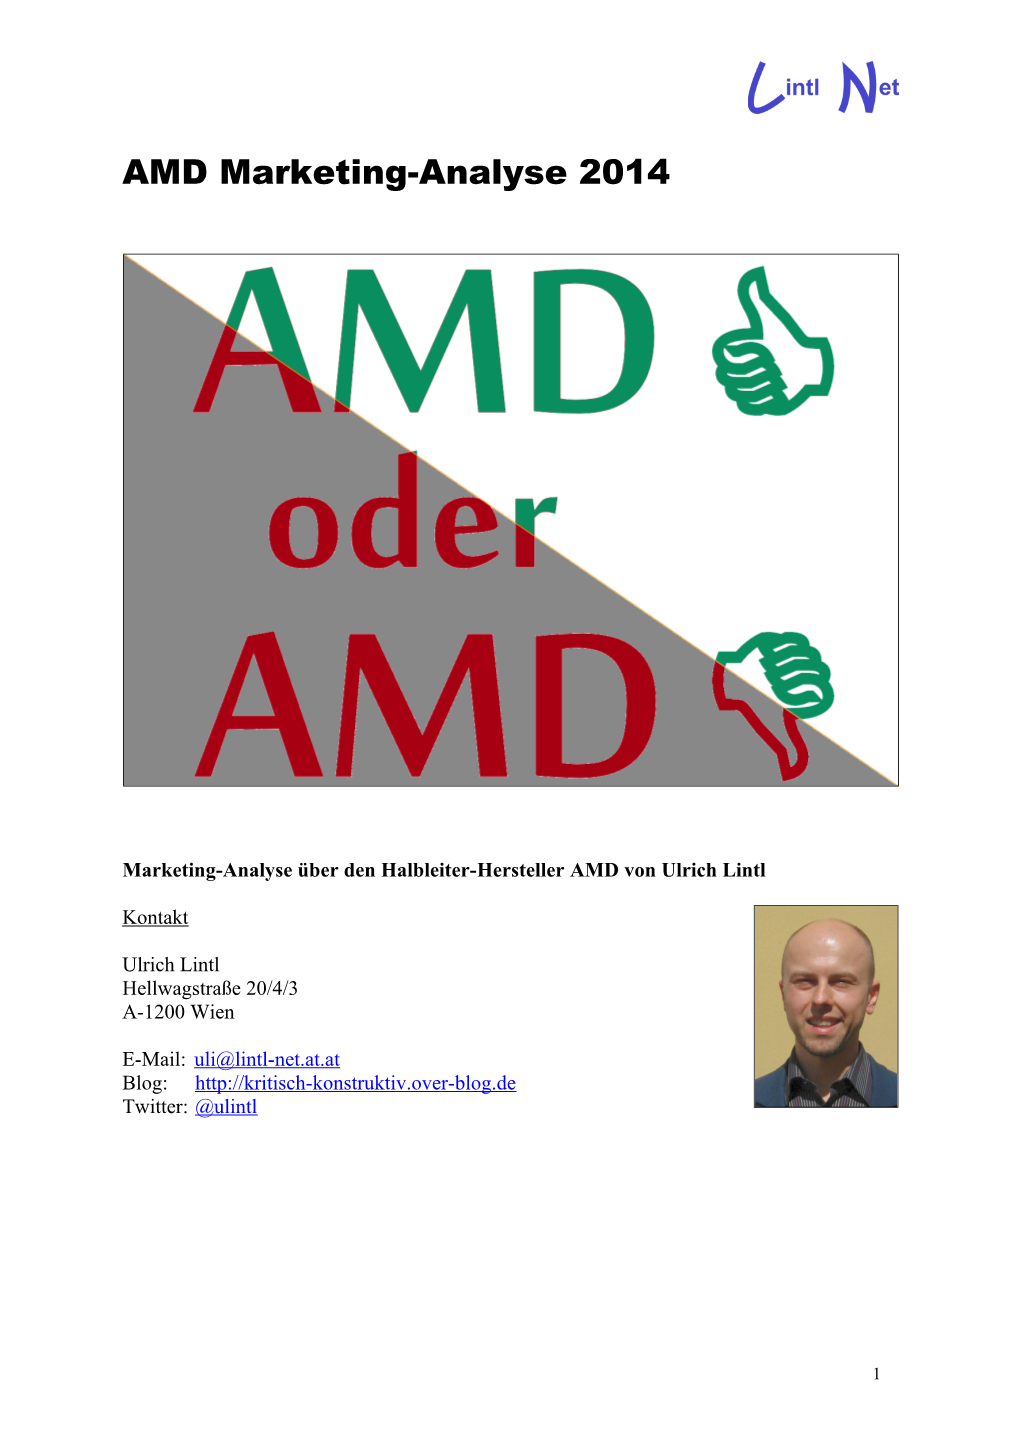 Marketing-Analyse AMD 2014